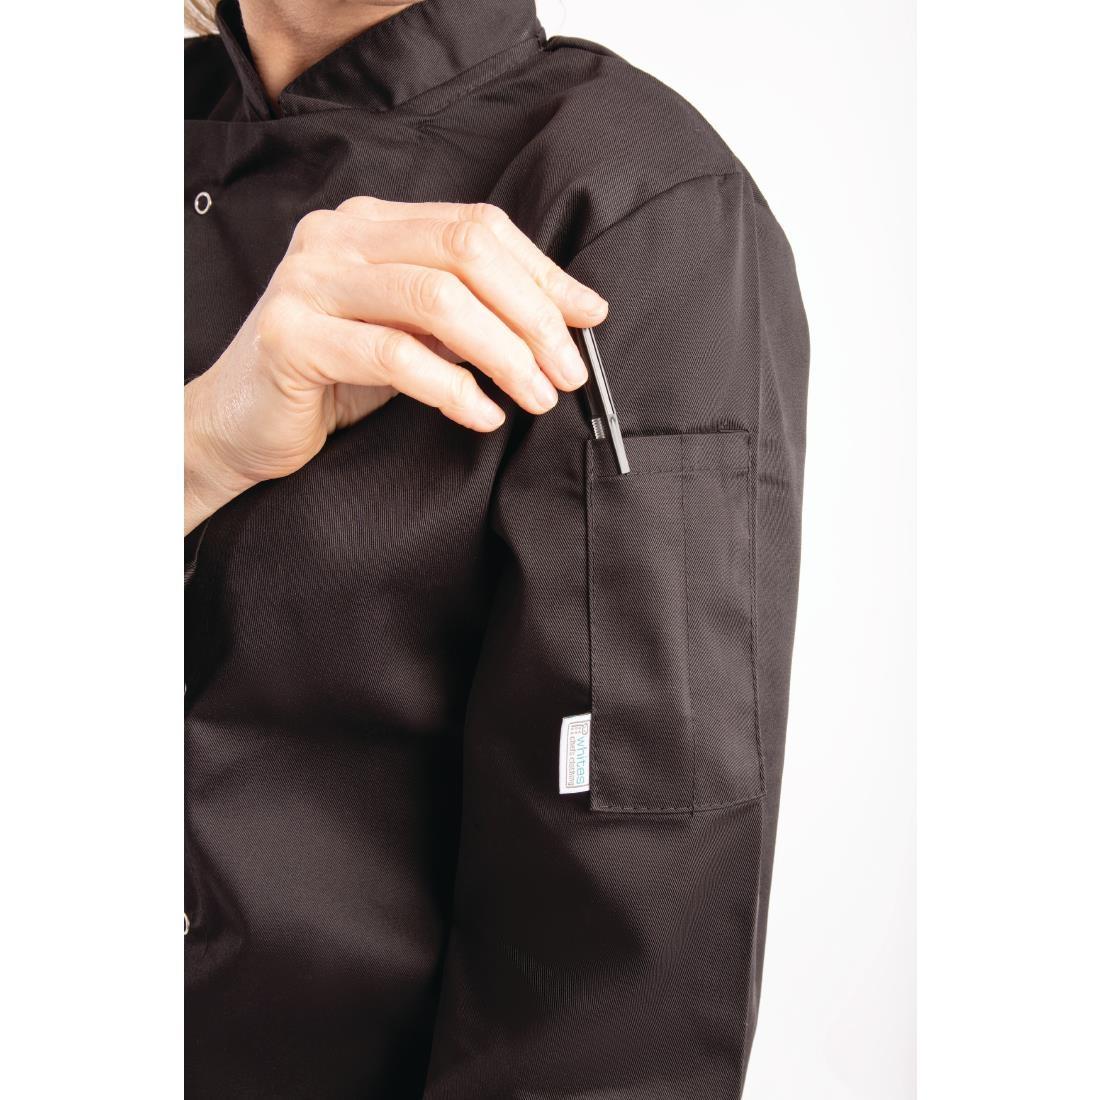 Whites Vegas Unisex Chefs Jacket Long Sleeve Black S - A438-S  - 12